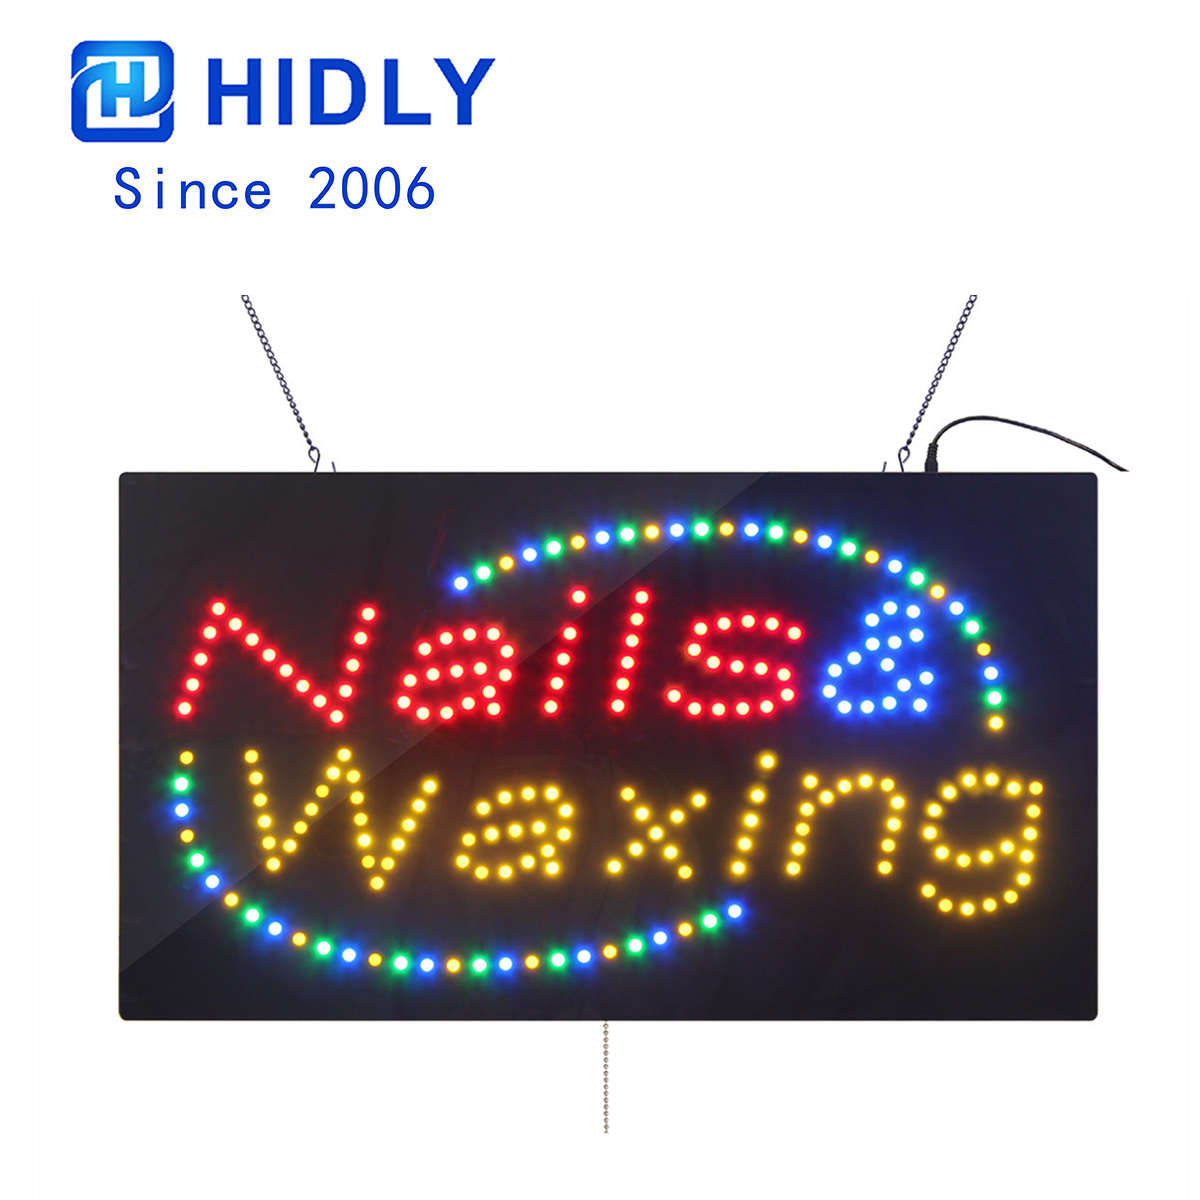 nails waxing custom sign